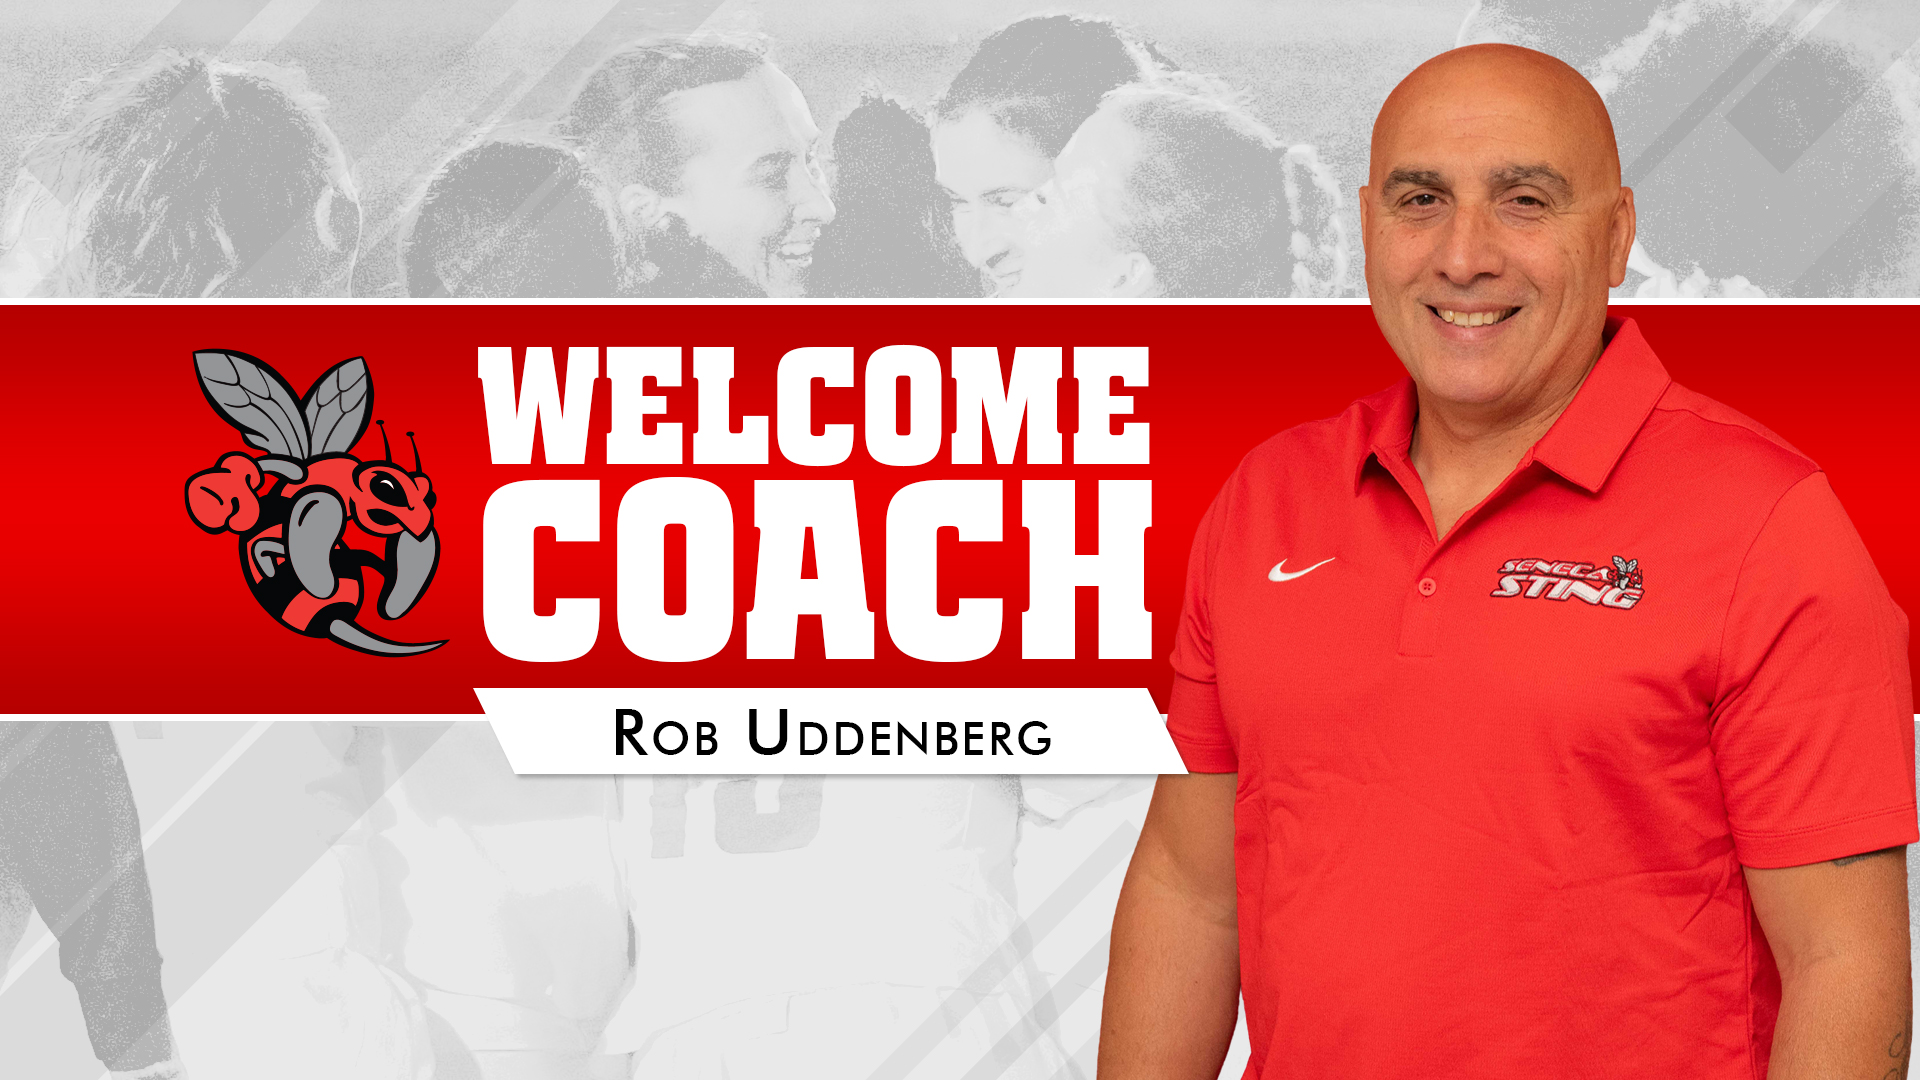 Uddenberg Joins Coaching Staff